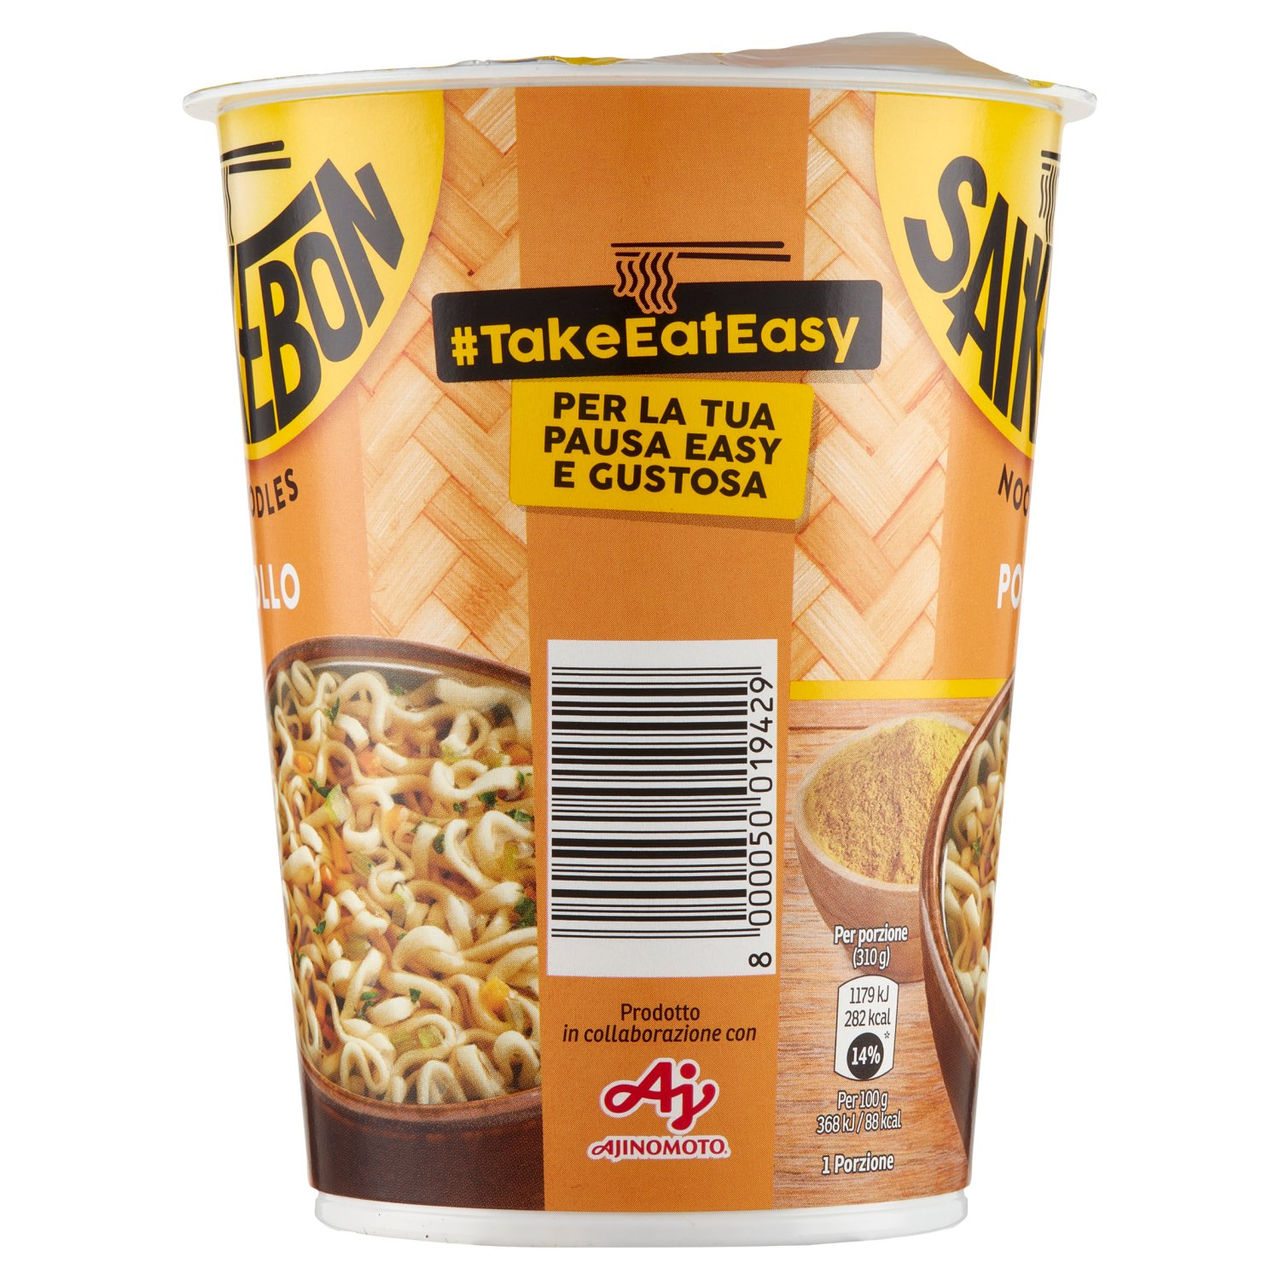 Star Saikebon Noodles Pollo 60 g